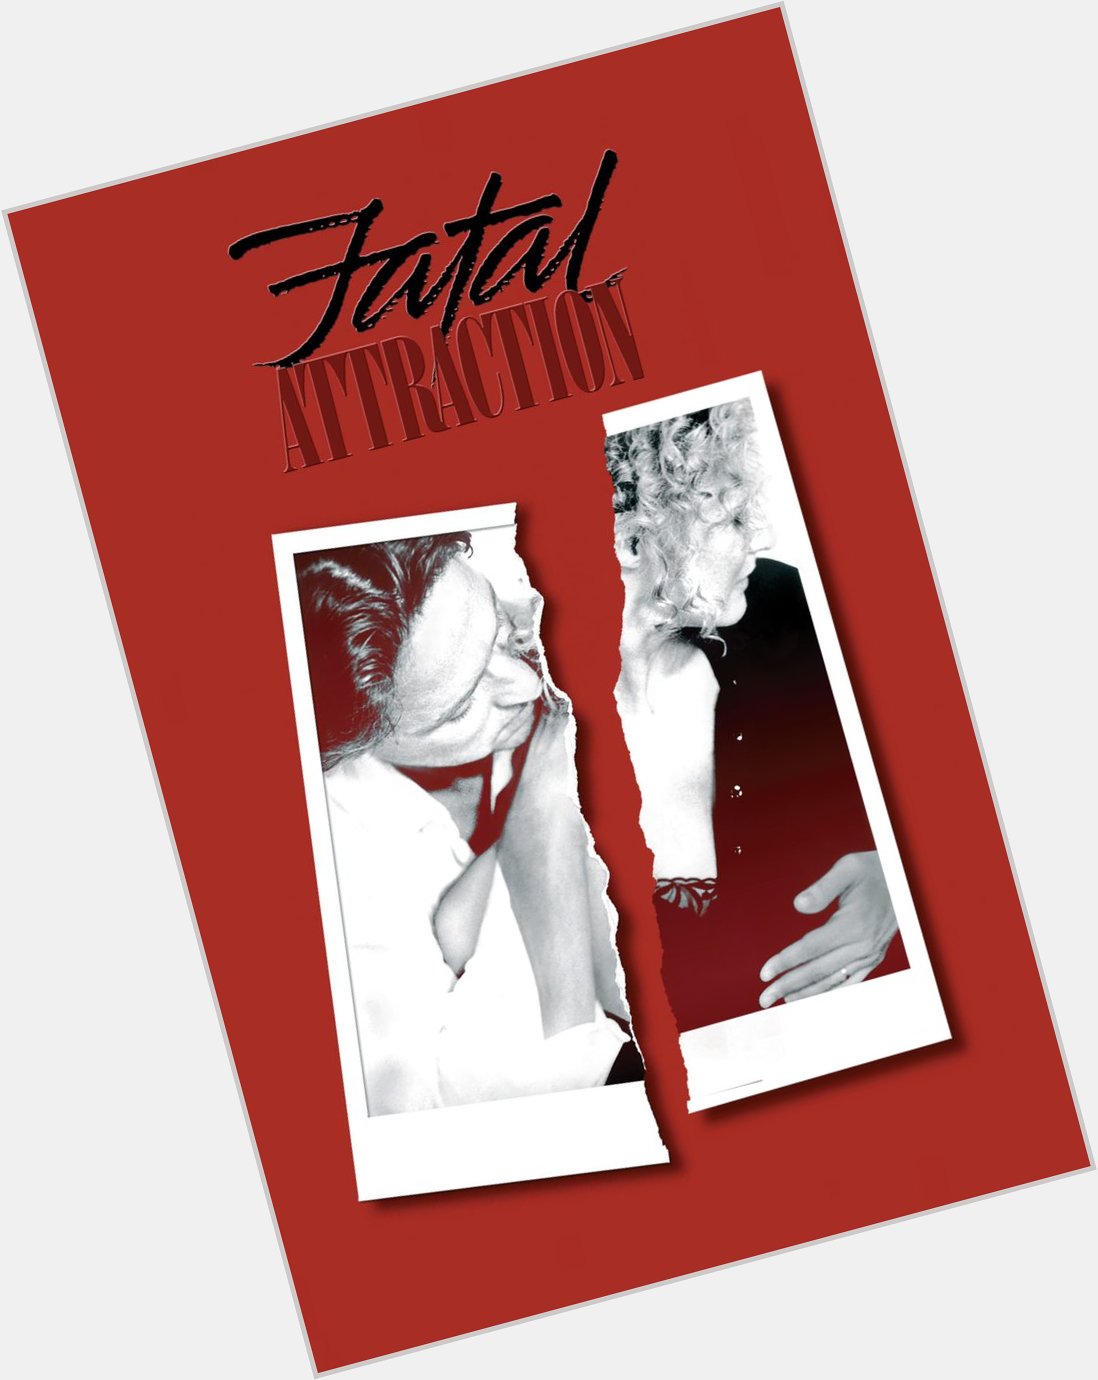 Fatal  Attraction  (1987)
Happy Birthday, Glenn Close! 